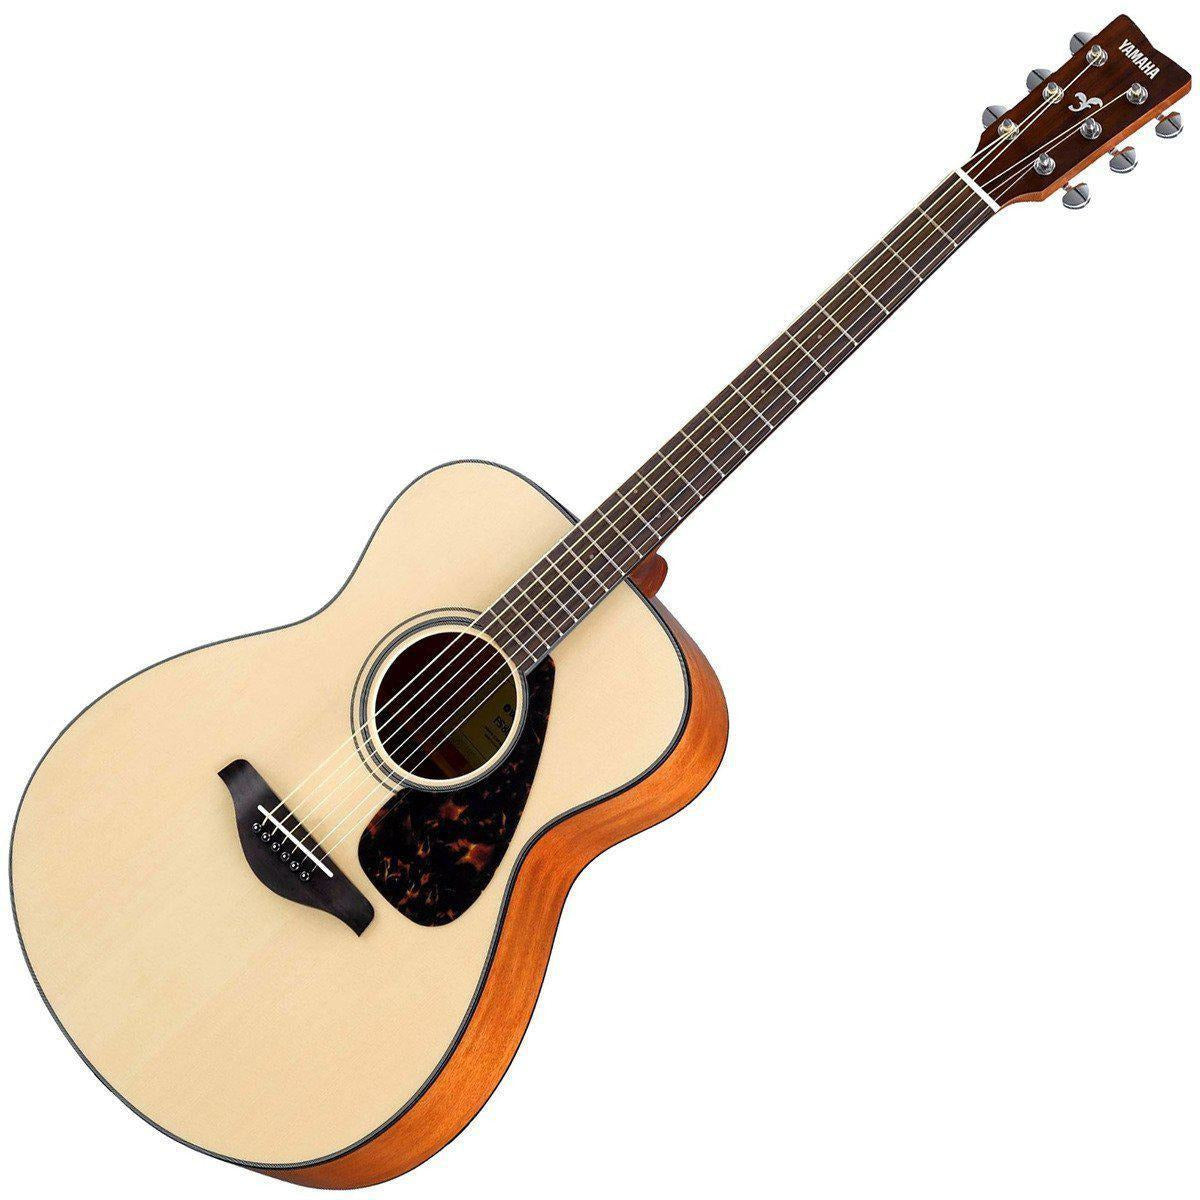 Yamaha FS800 Concert Acoustic Guitar